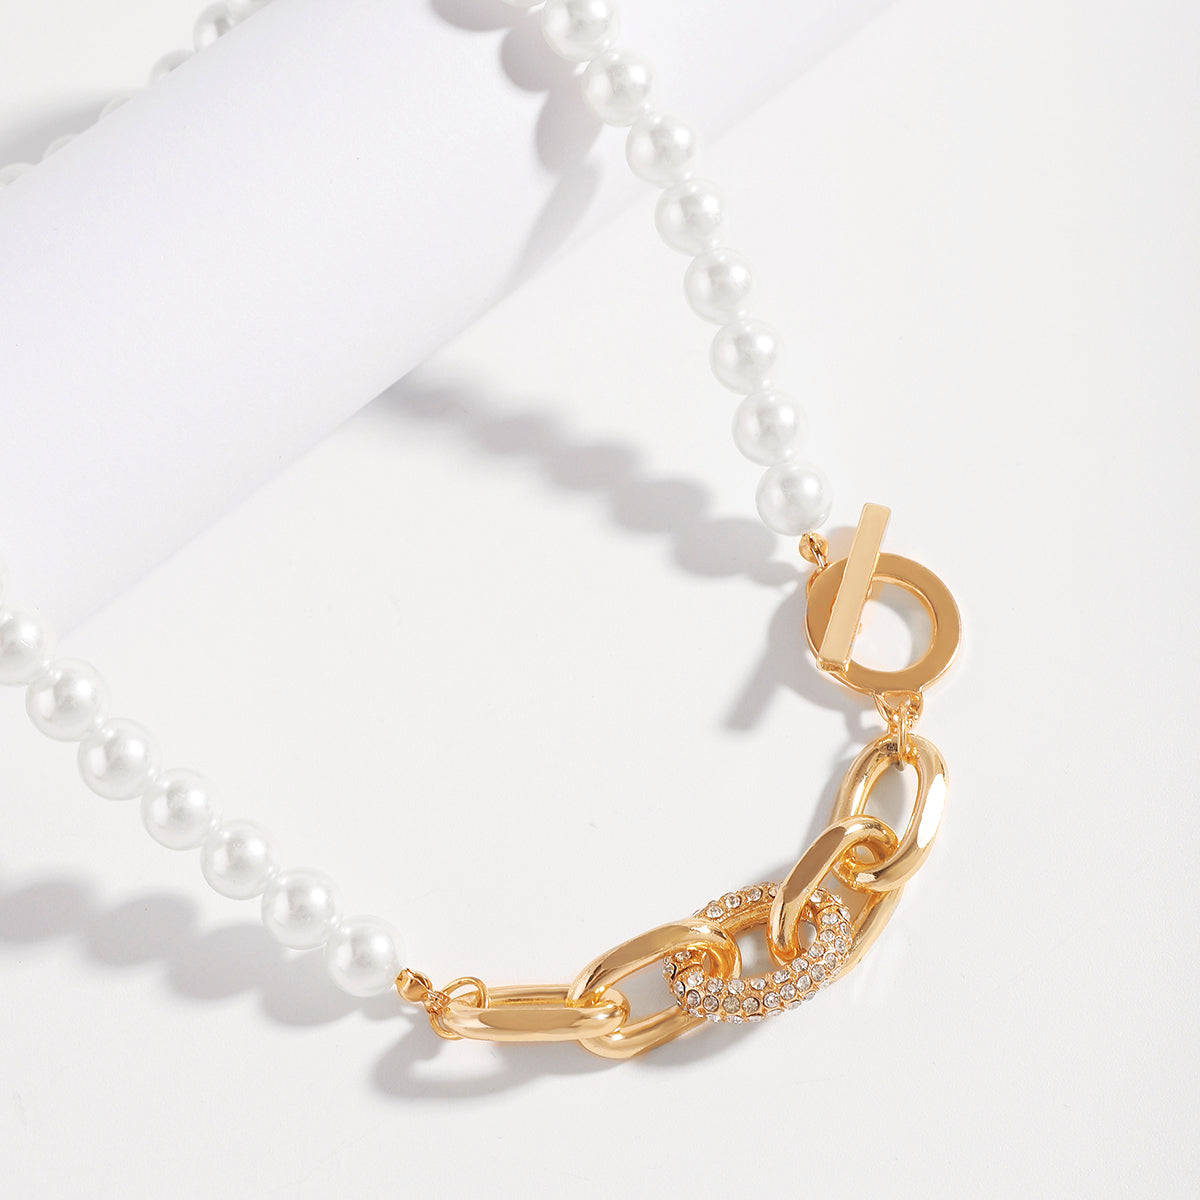 N11513 Charm Rhinestone Pearls T Clasp Chain Necklace